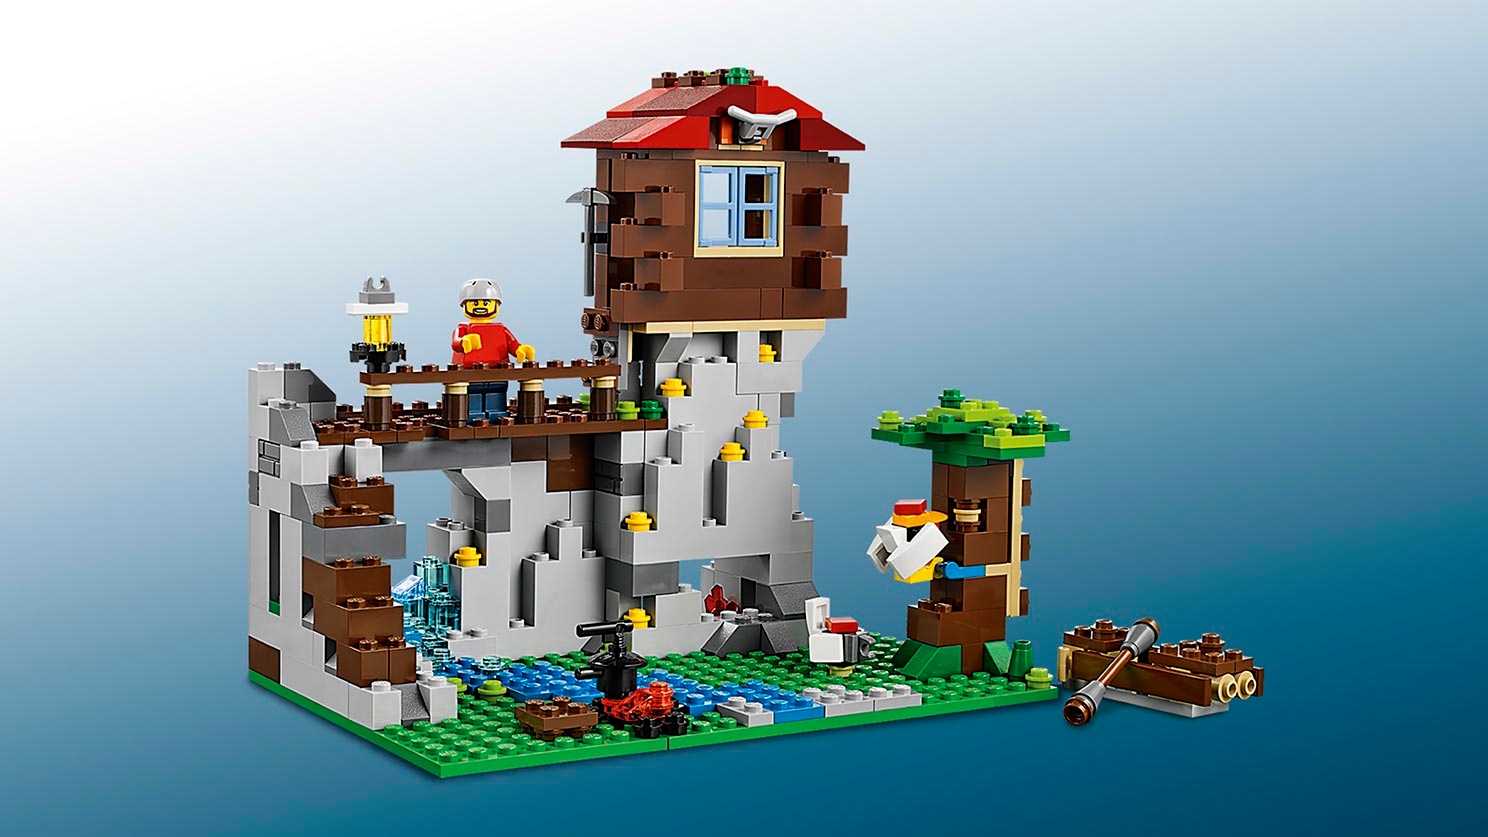 Mountain Hut 31025 - LEGO® Creator Sets - LEGO.com for